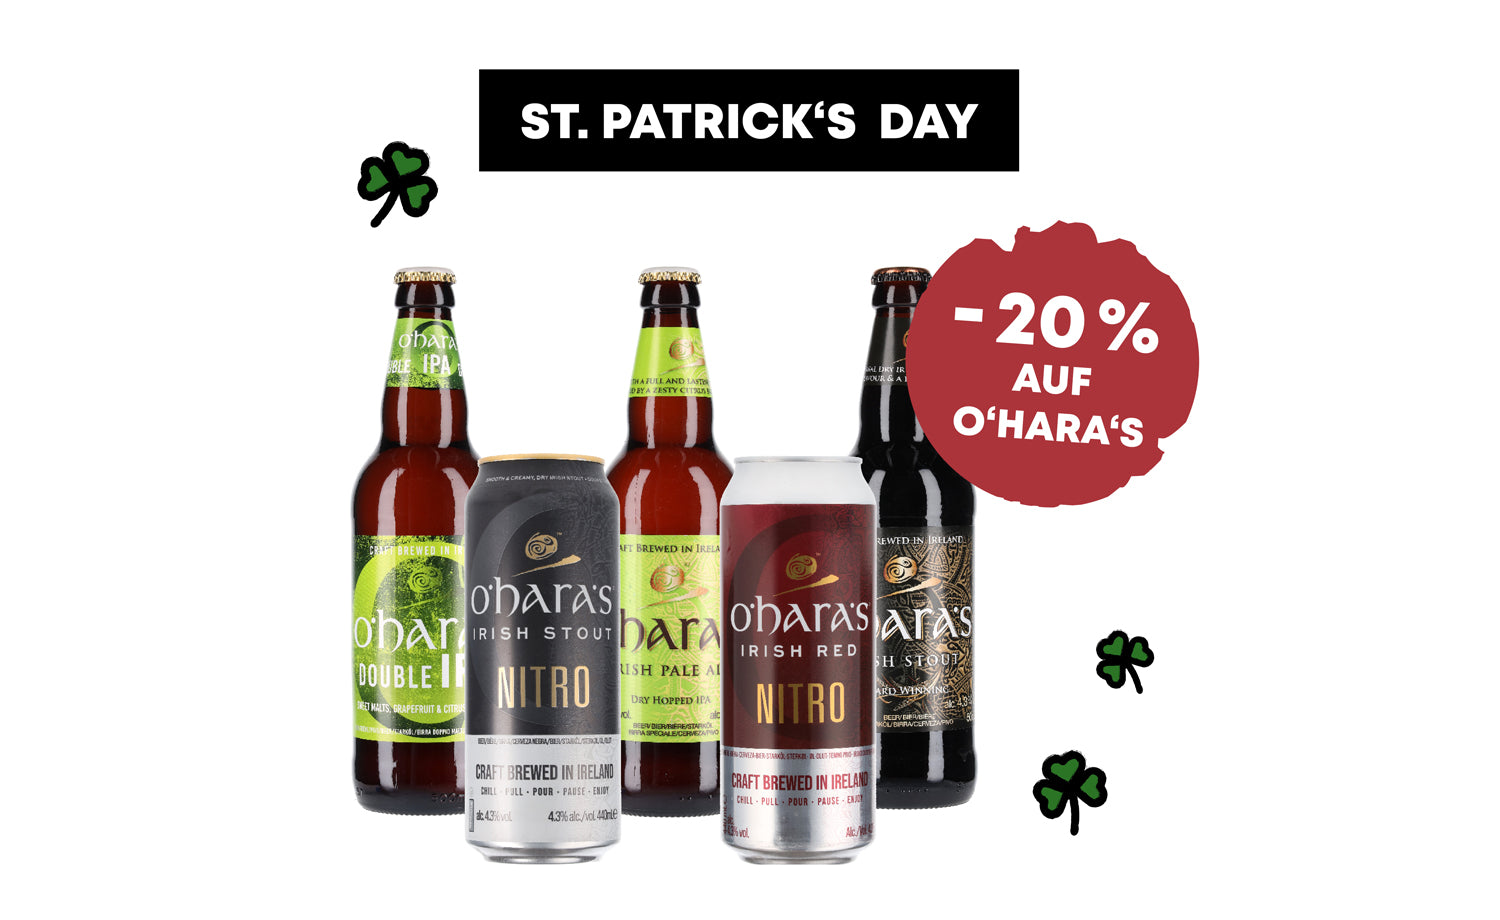 O'Hara's St. Patrick's Day Bier Aktion